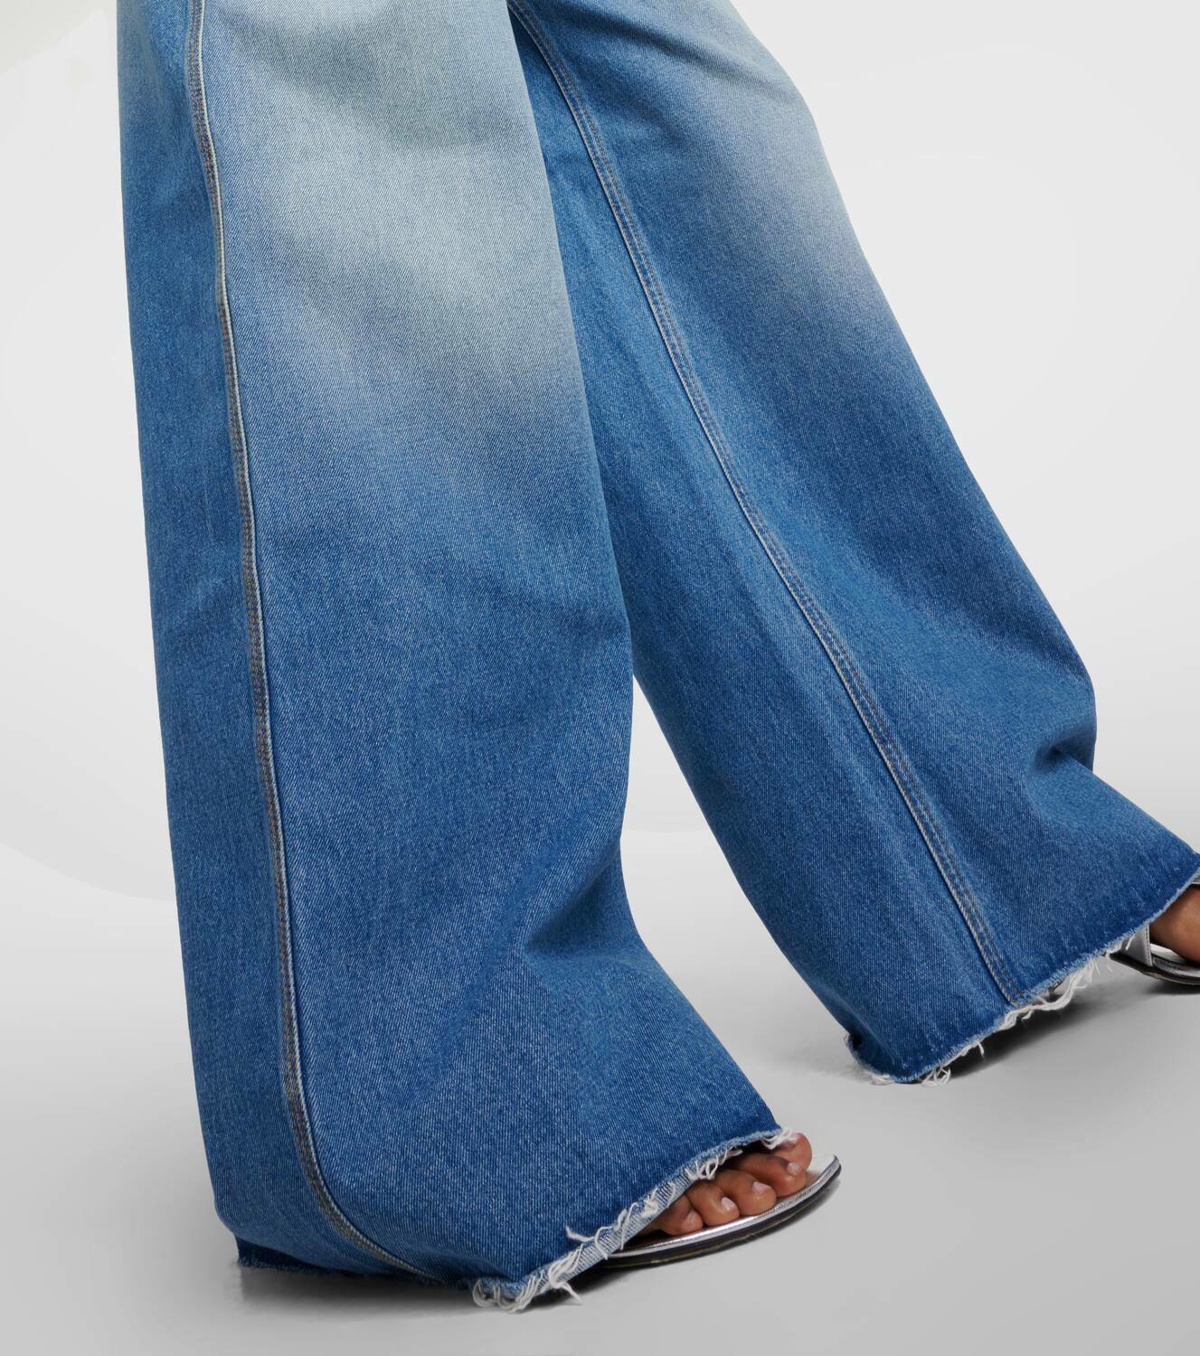 Gucci Horsebit high-rise wide-leg jeans Gucci